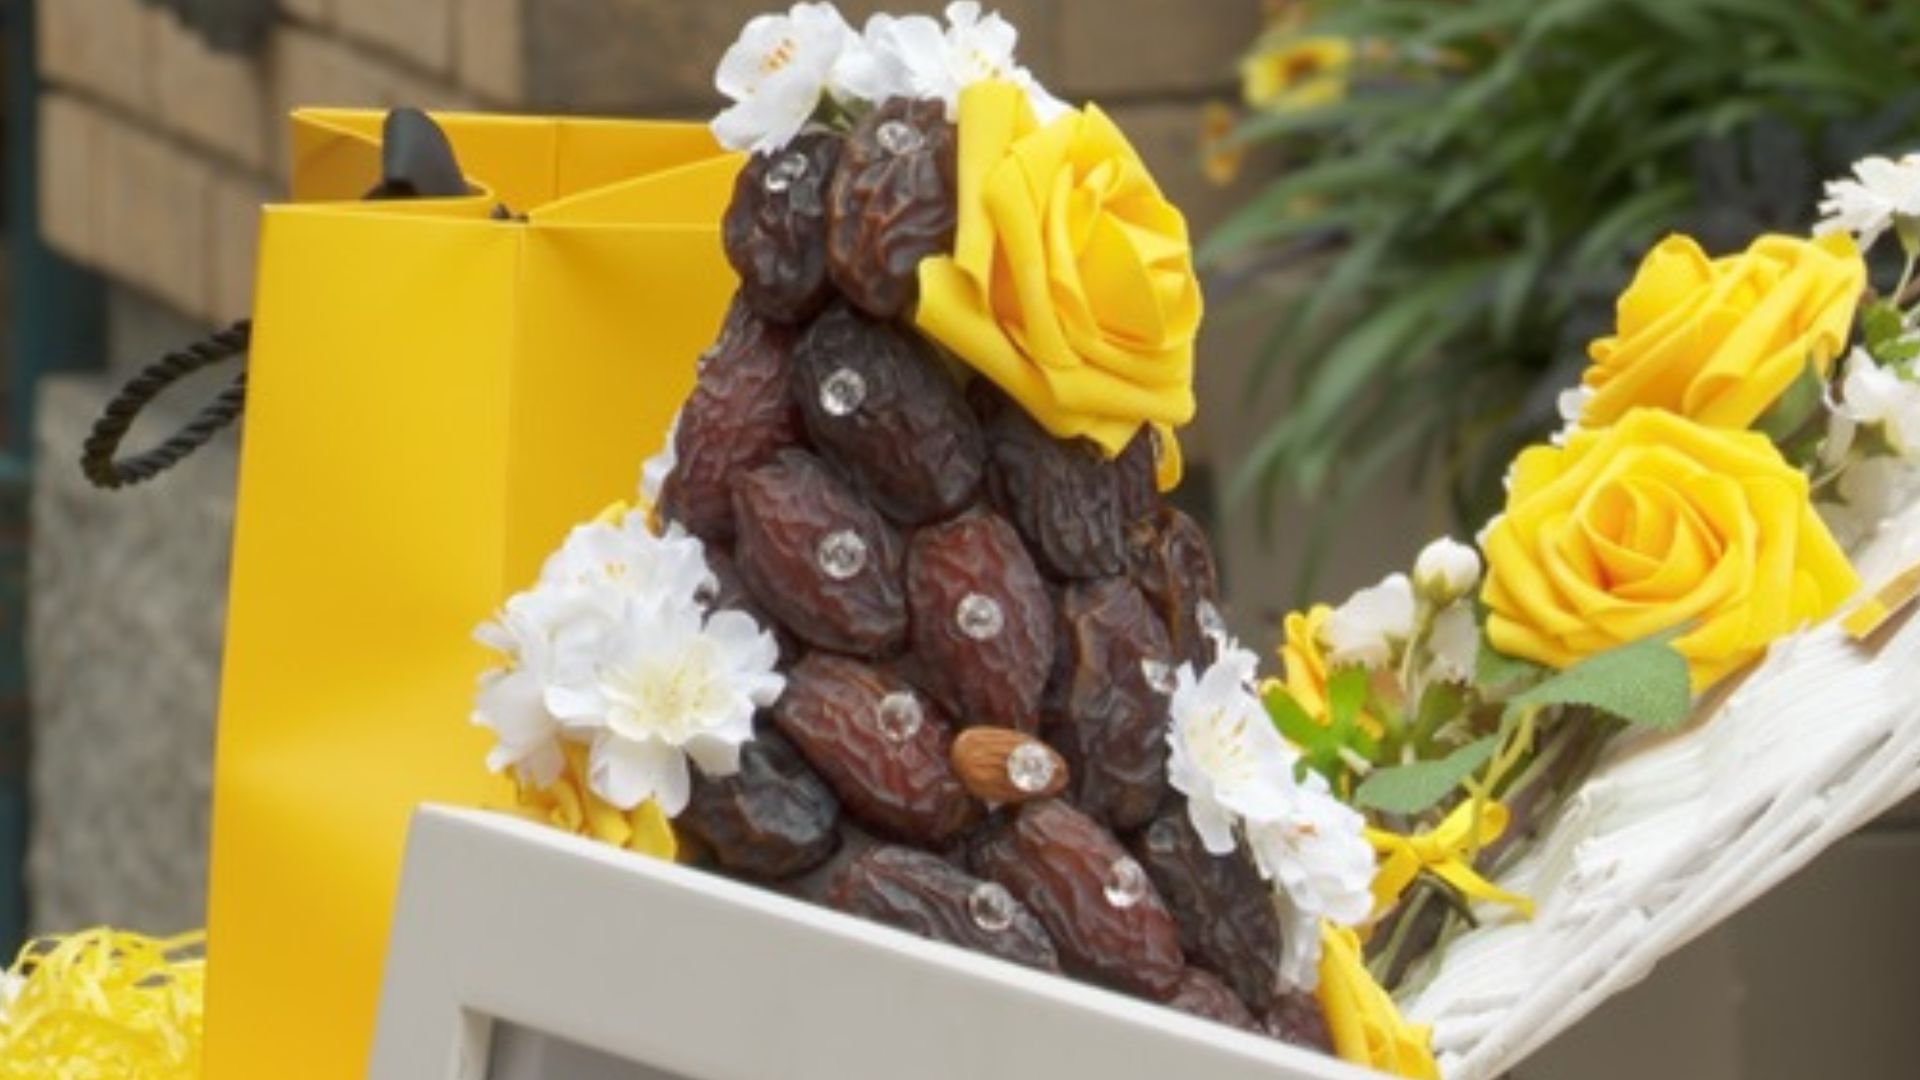 Comptoir Libanais fuses dates and flower displays to celebrate Chelsea in Bloom. /CGTN
